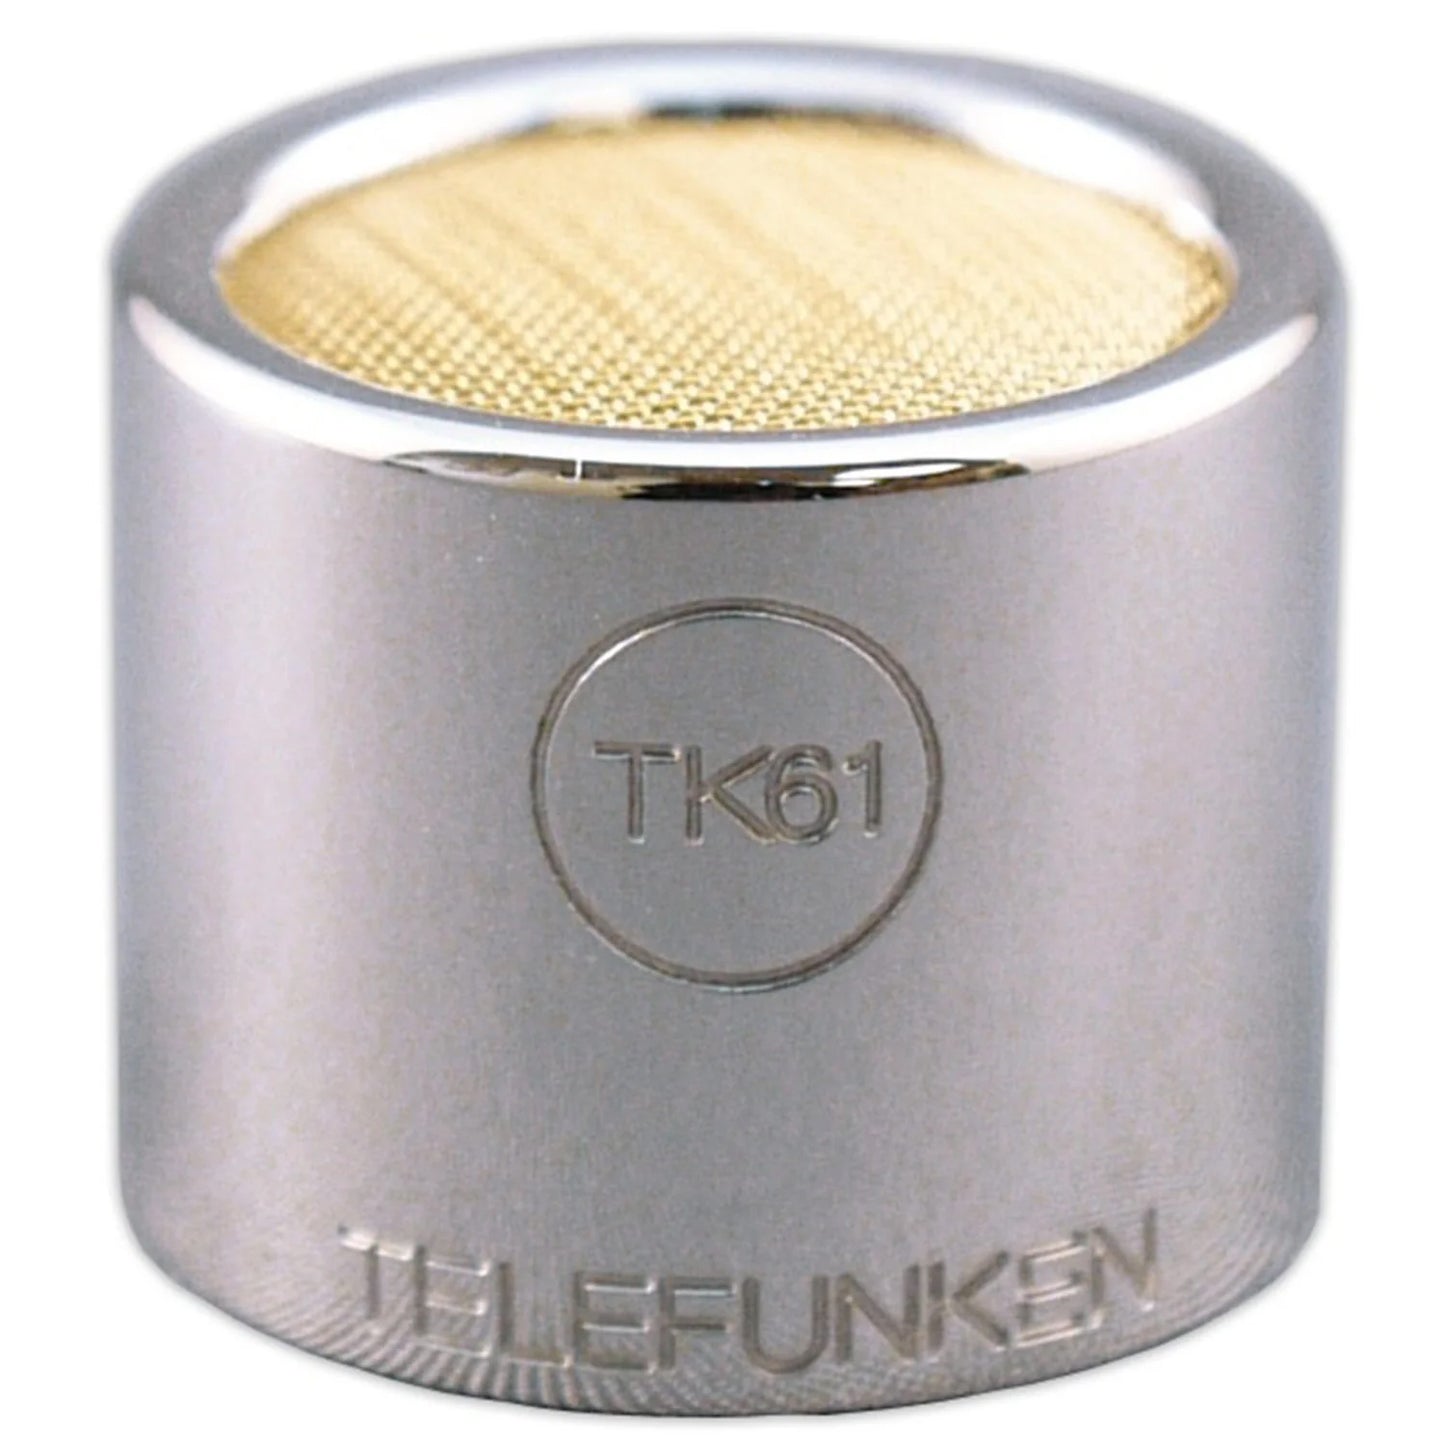 Telefunken M61 Small Diaphragm FET with TK61 Omnidirectional Capsule